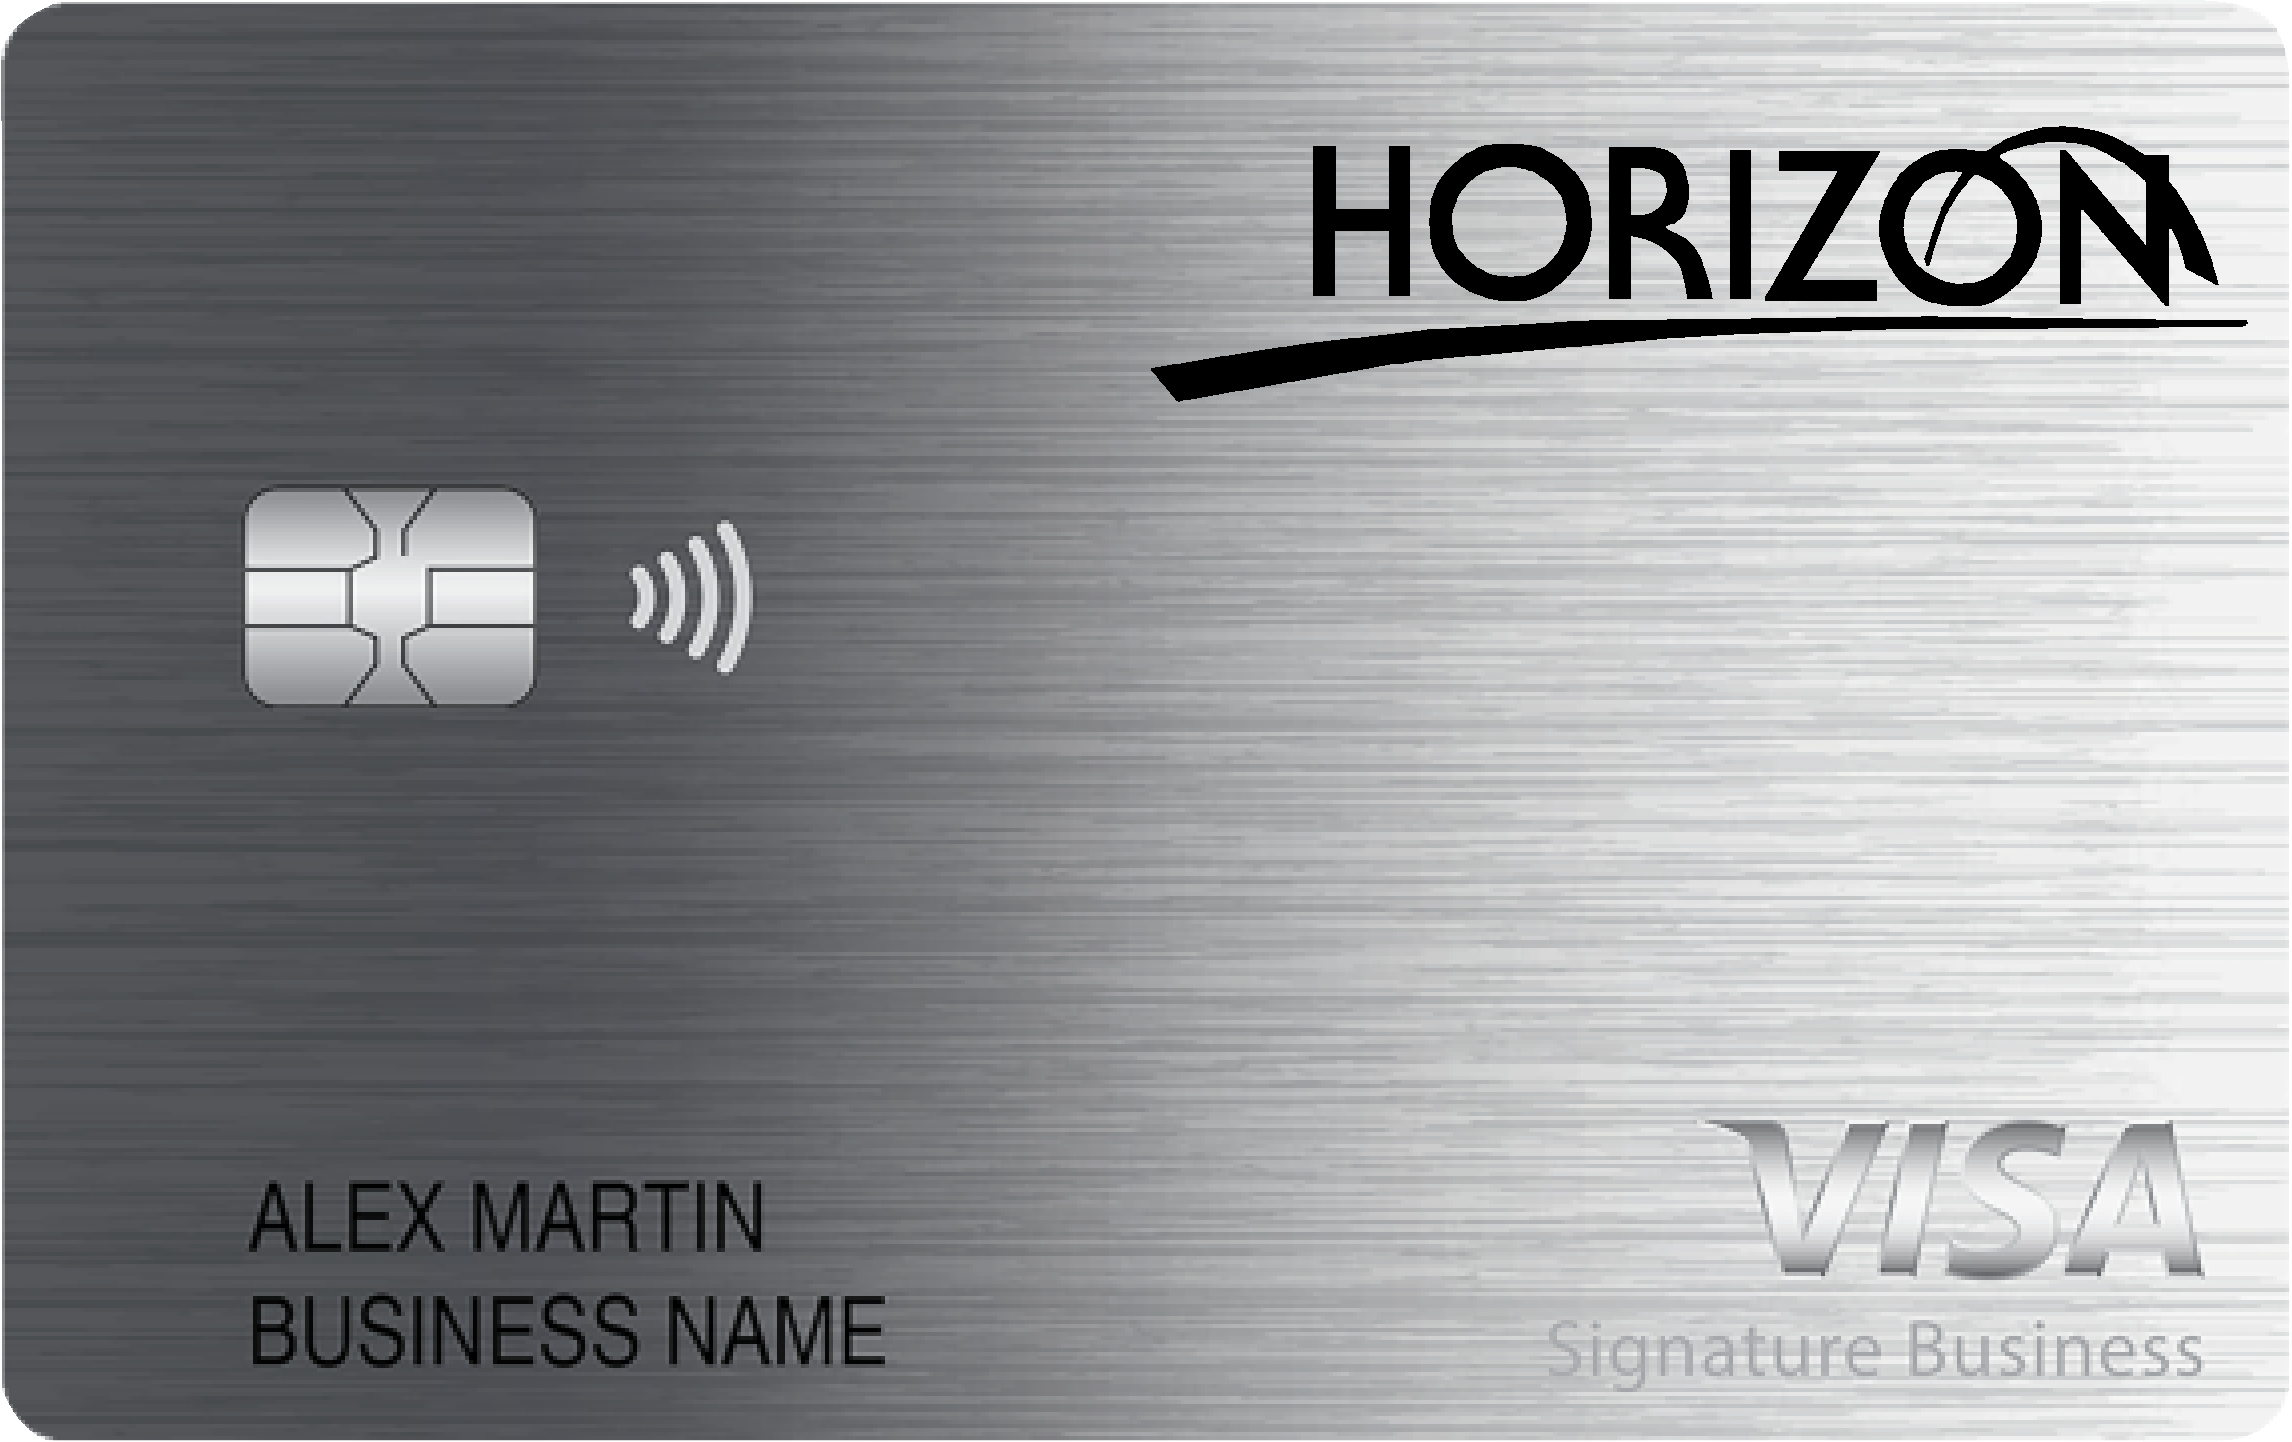 Horizon Bank Smart Business Rewards Card